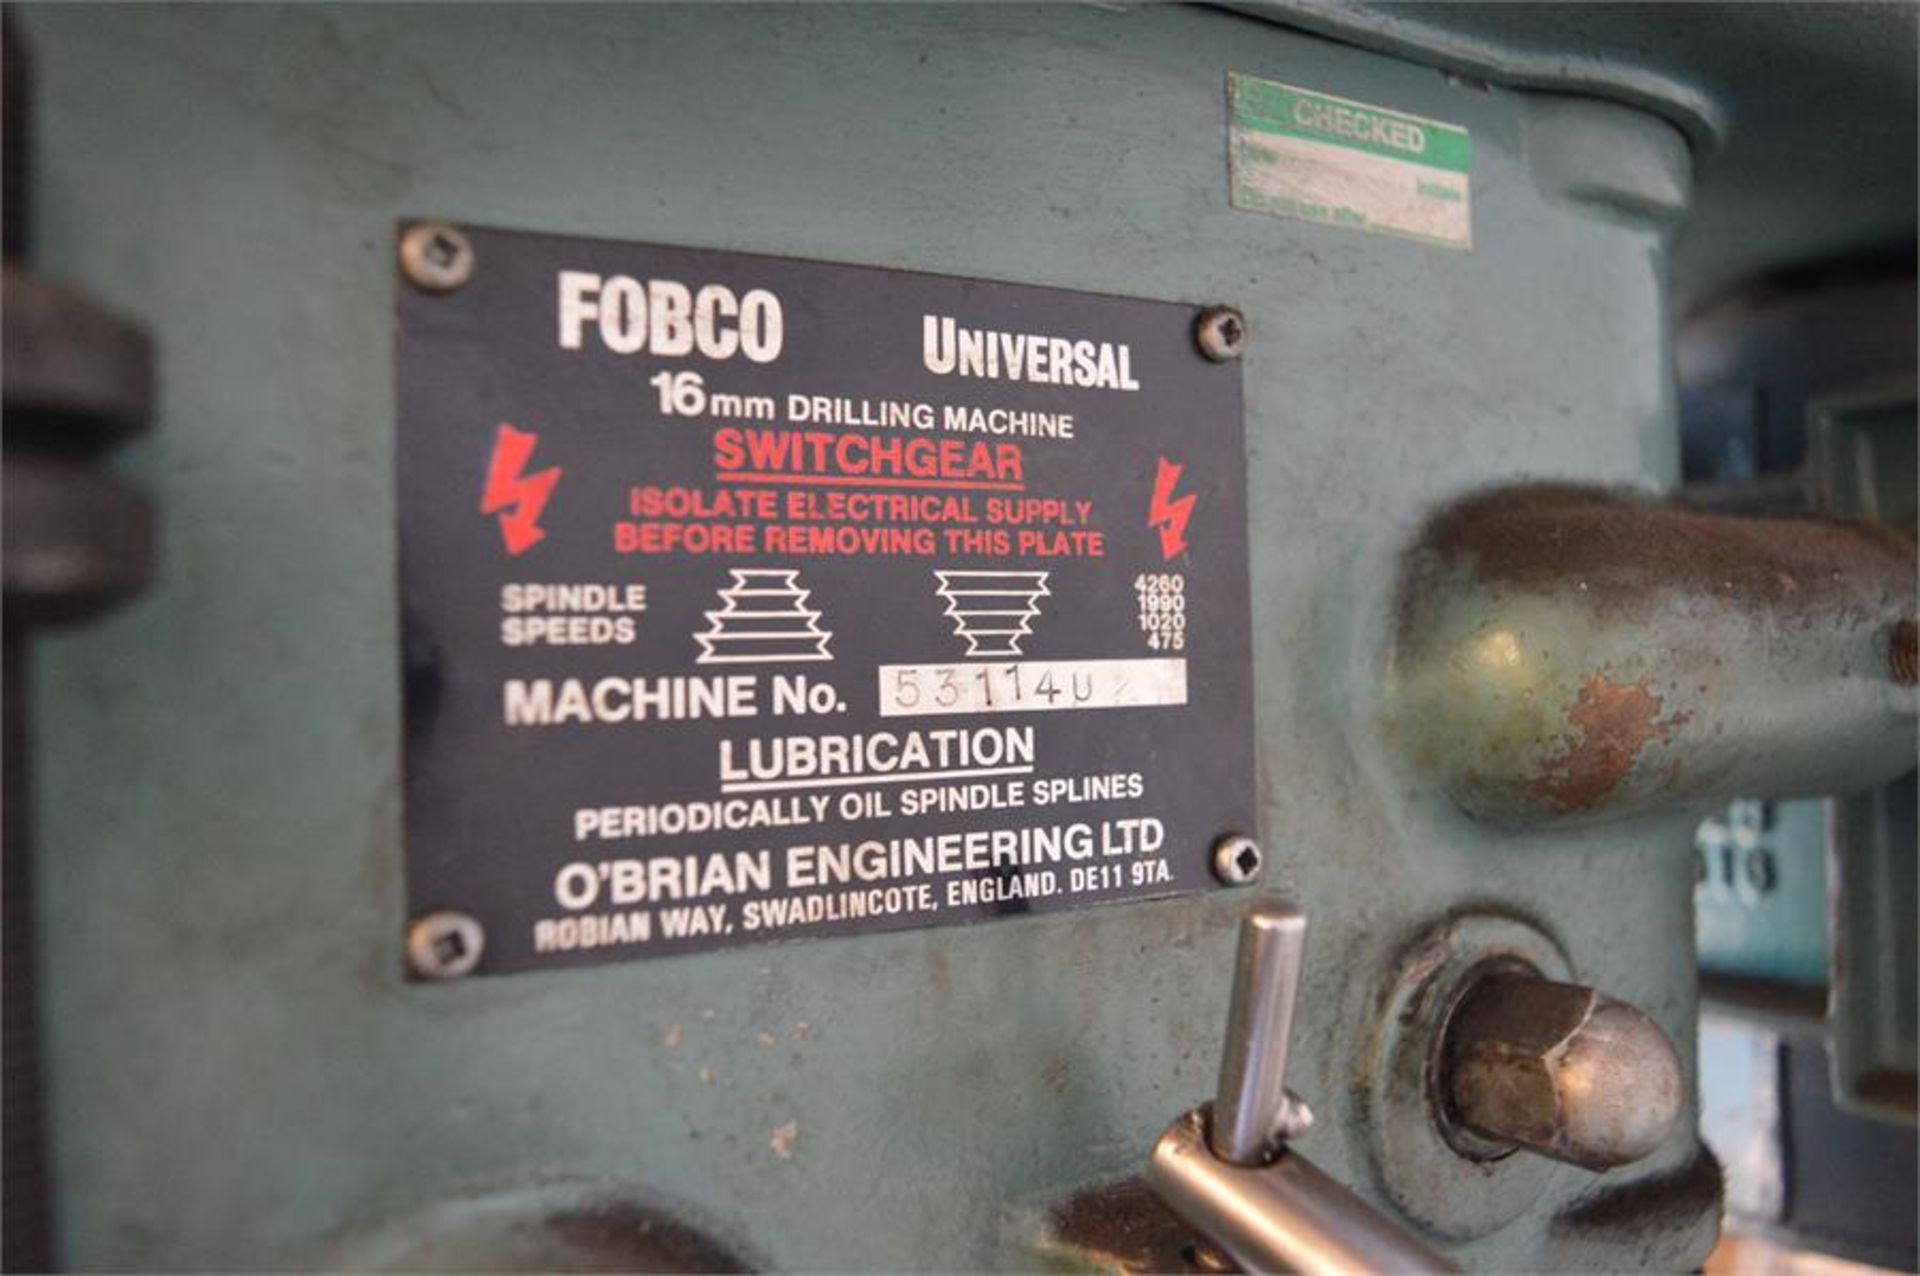 Fobco, Universal MT, 16mm pedestal drill, Machine No. 5311402 - Image 2 of 2